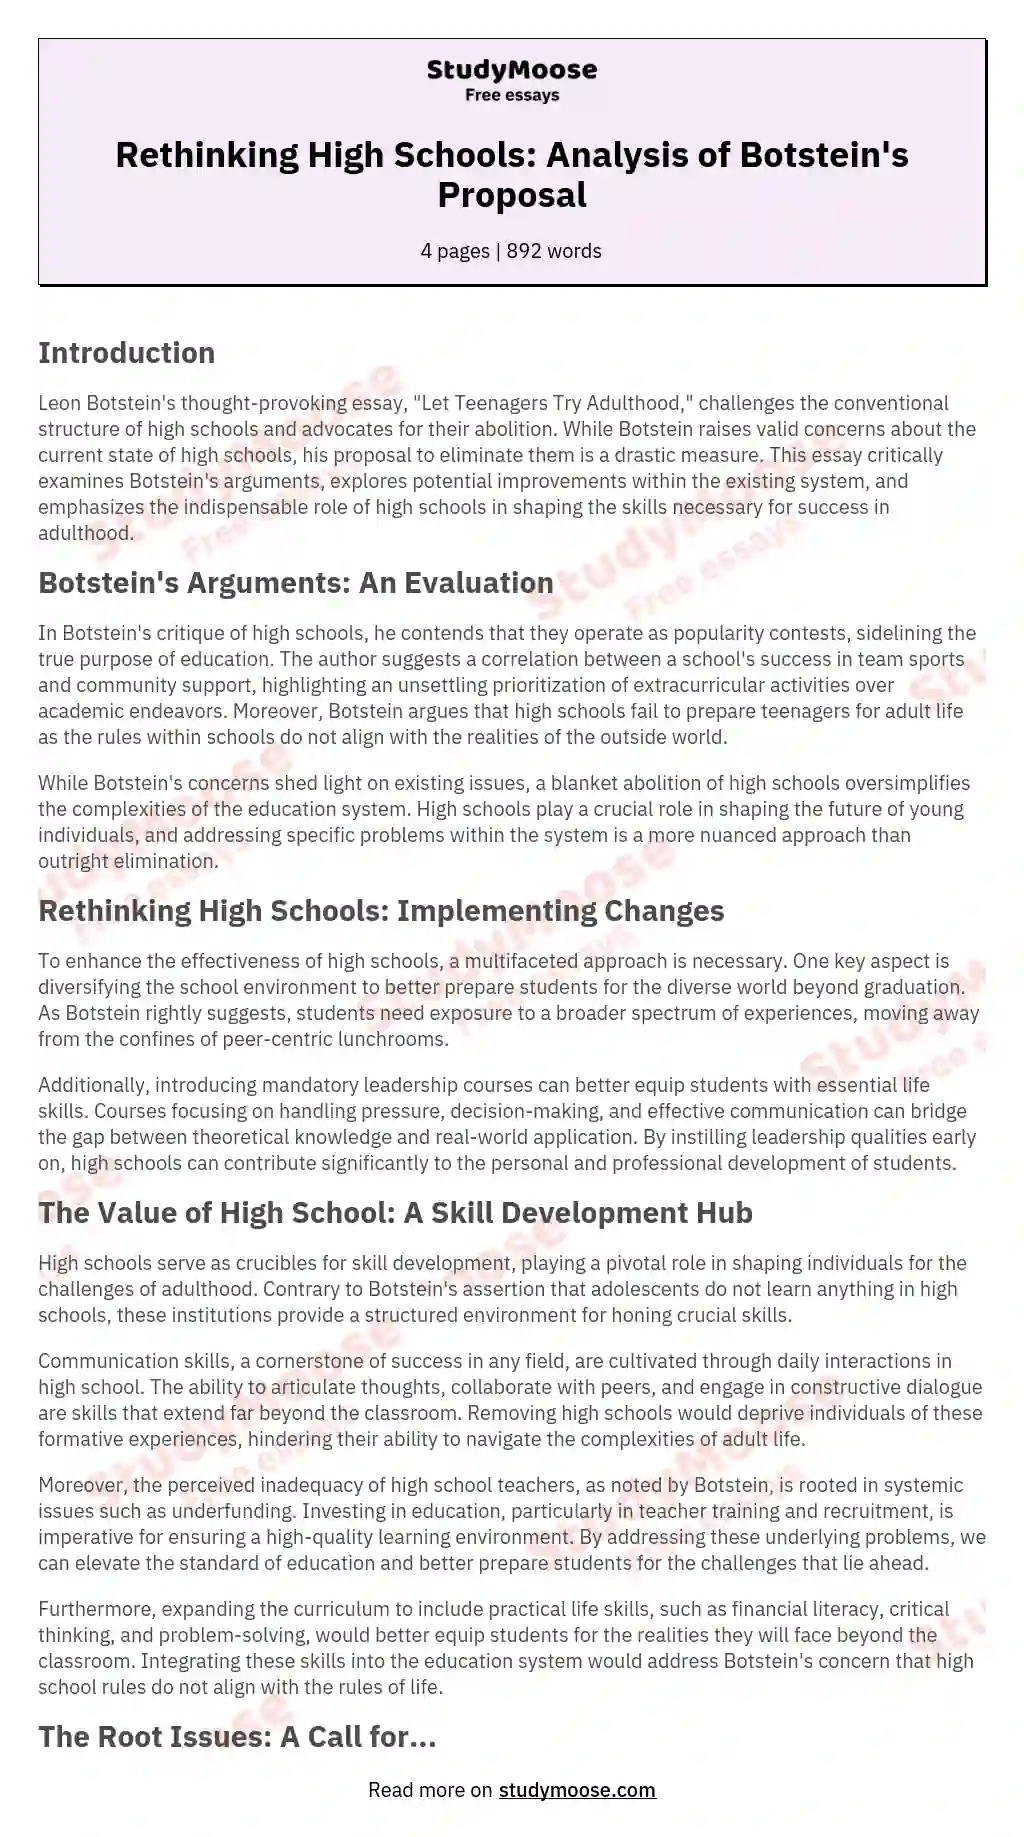 Rethinking High Schools: Analysis of Botstein's Proposal essay